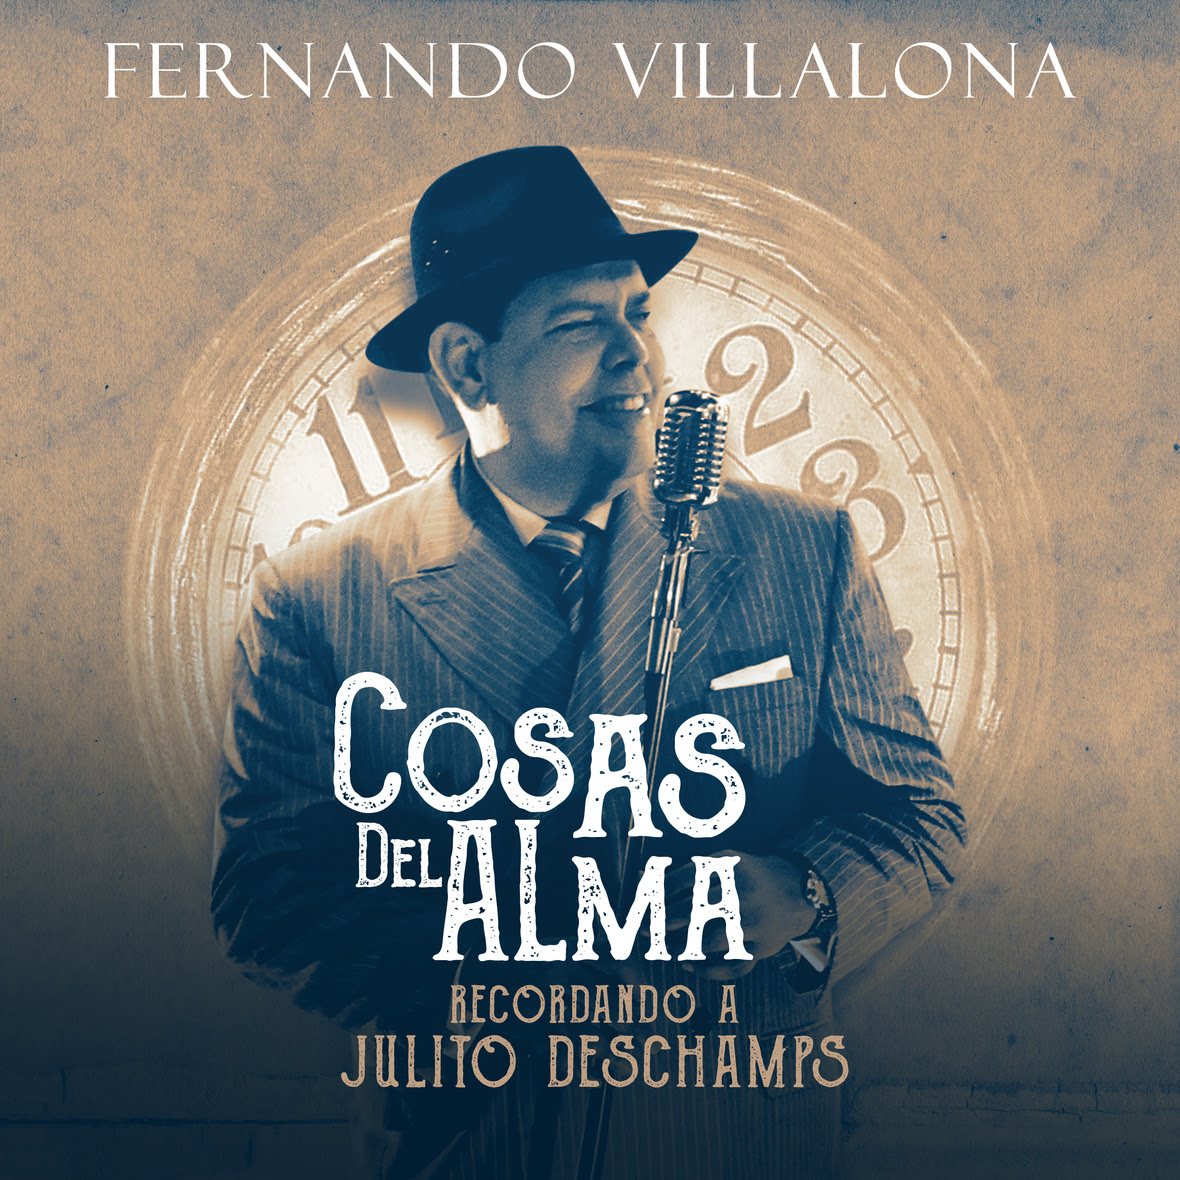 Fernando Villalona COSAS DEL ALMA RECORDANDO A JULITO DESCHAMPS